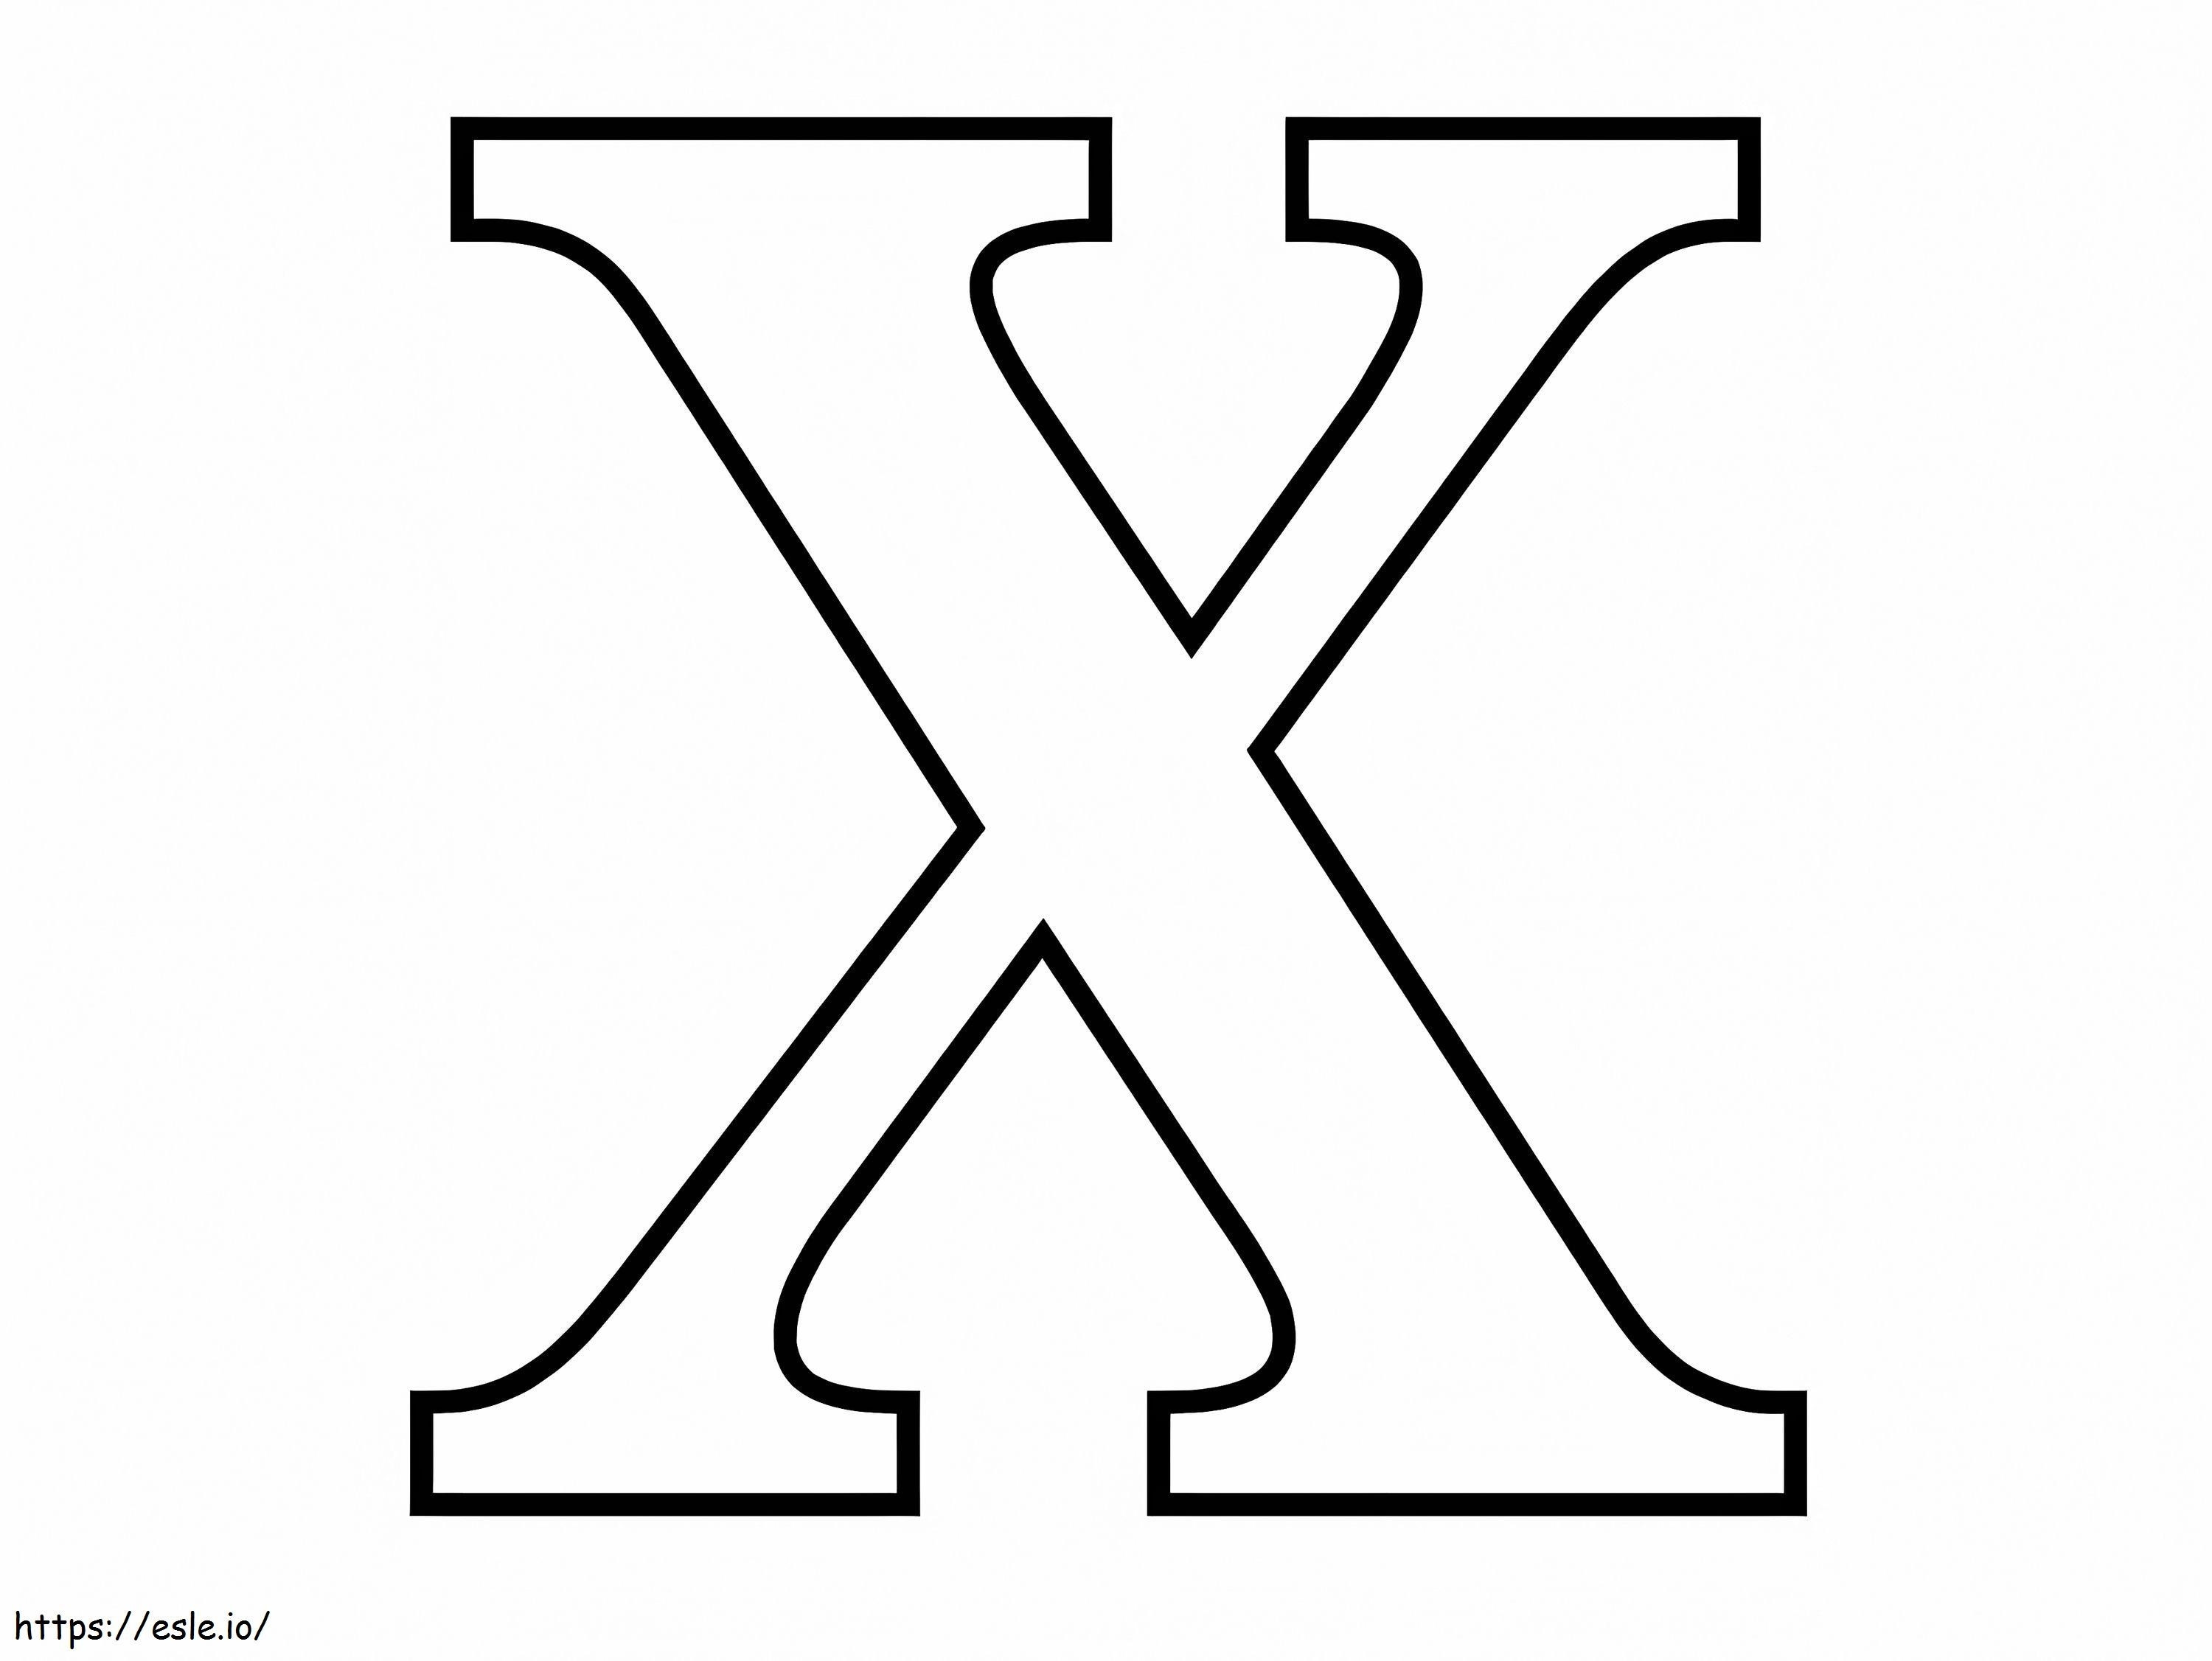 Litera X 1 kolorowanka